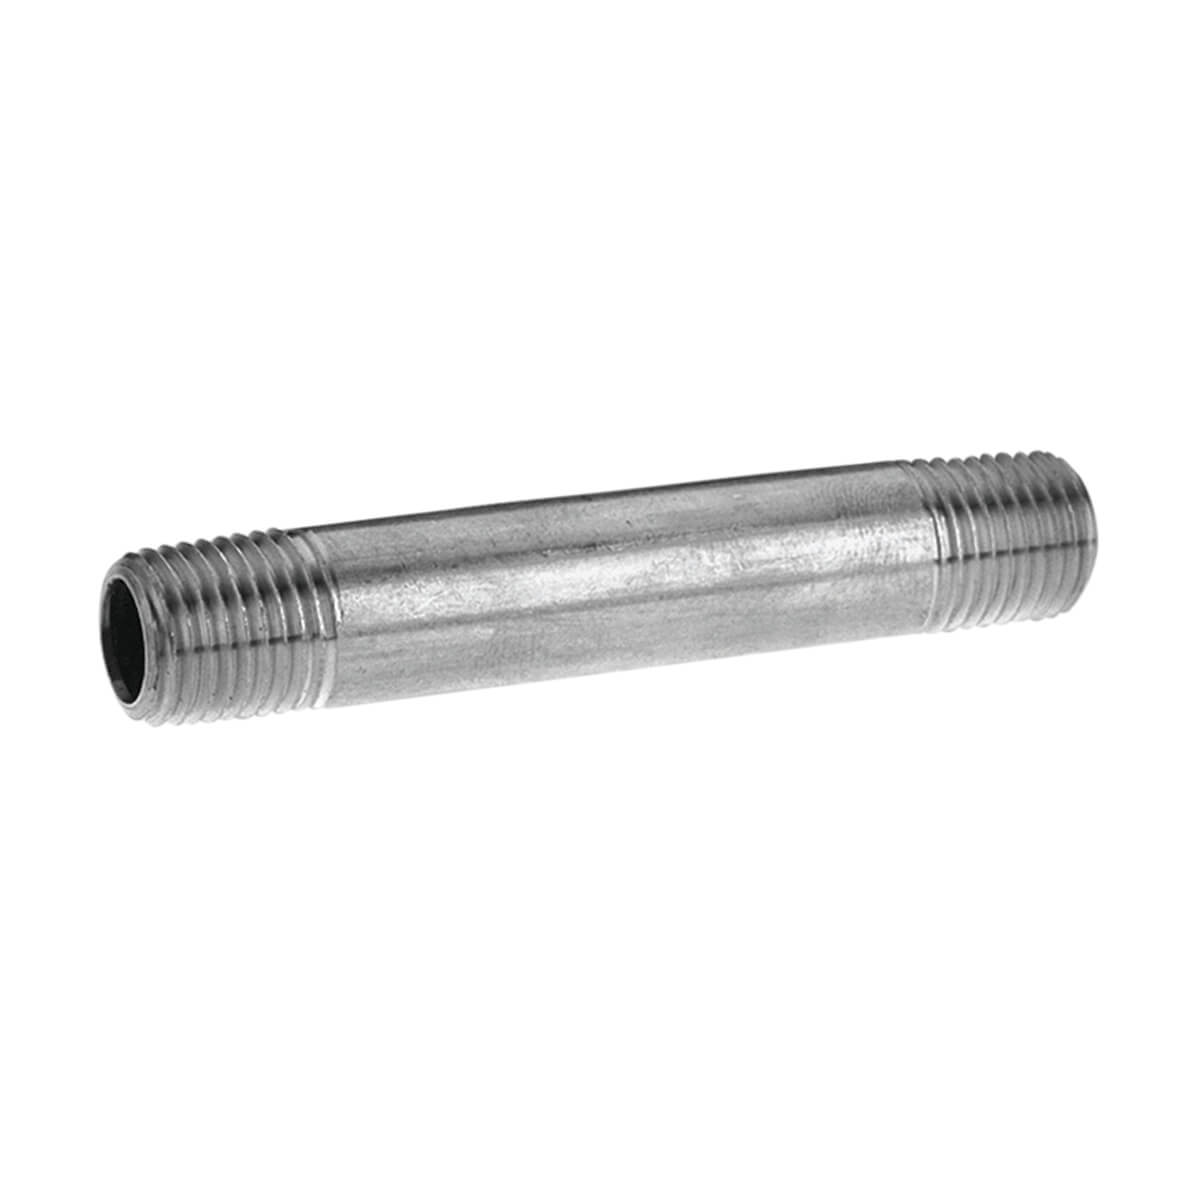 Pipe Nipple Galvanized Steel - 1-in x 5-in